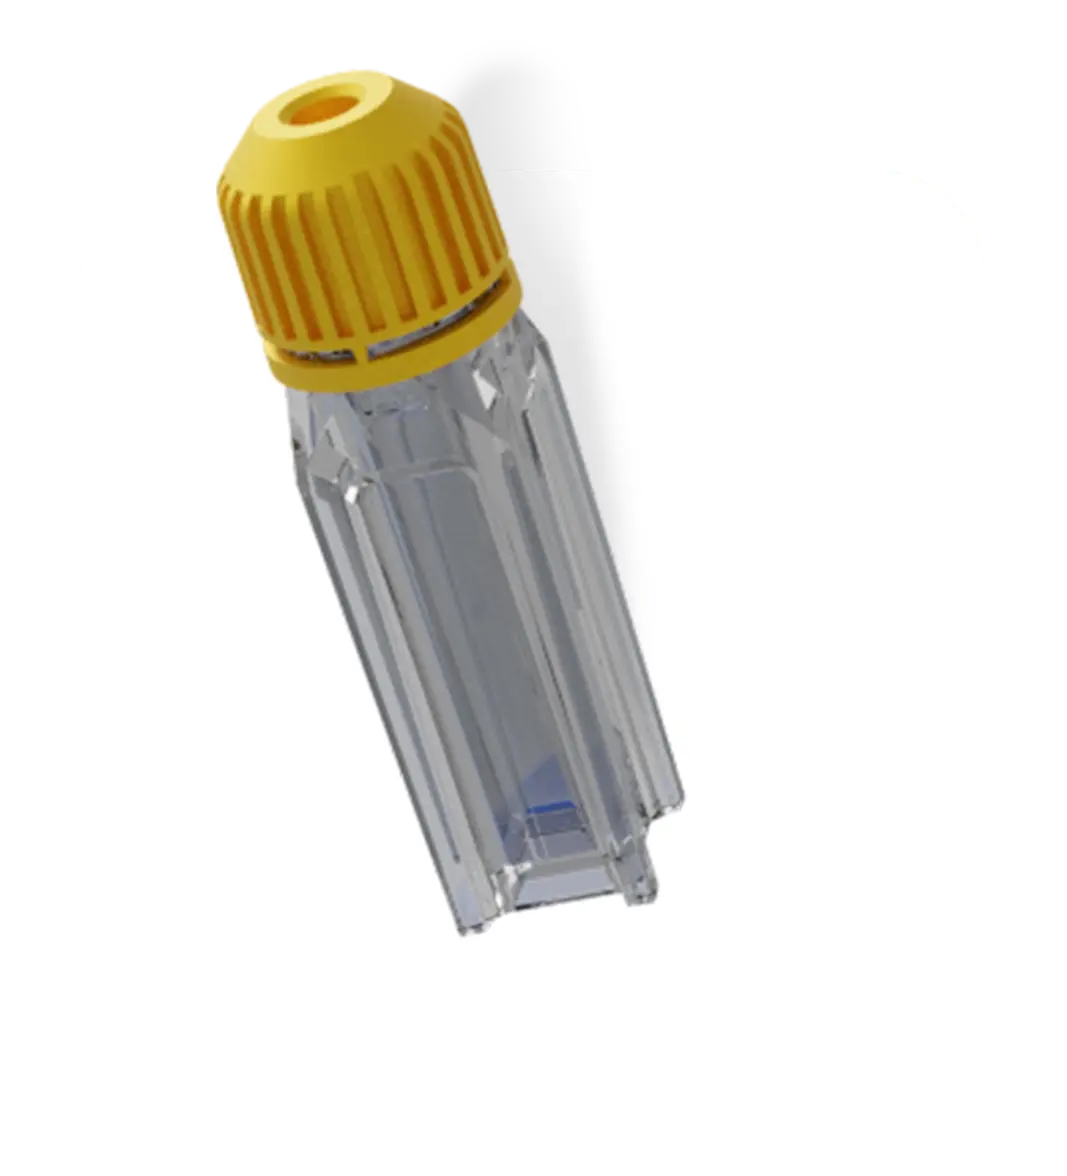 Proflo-U urine creatinine test